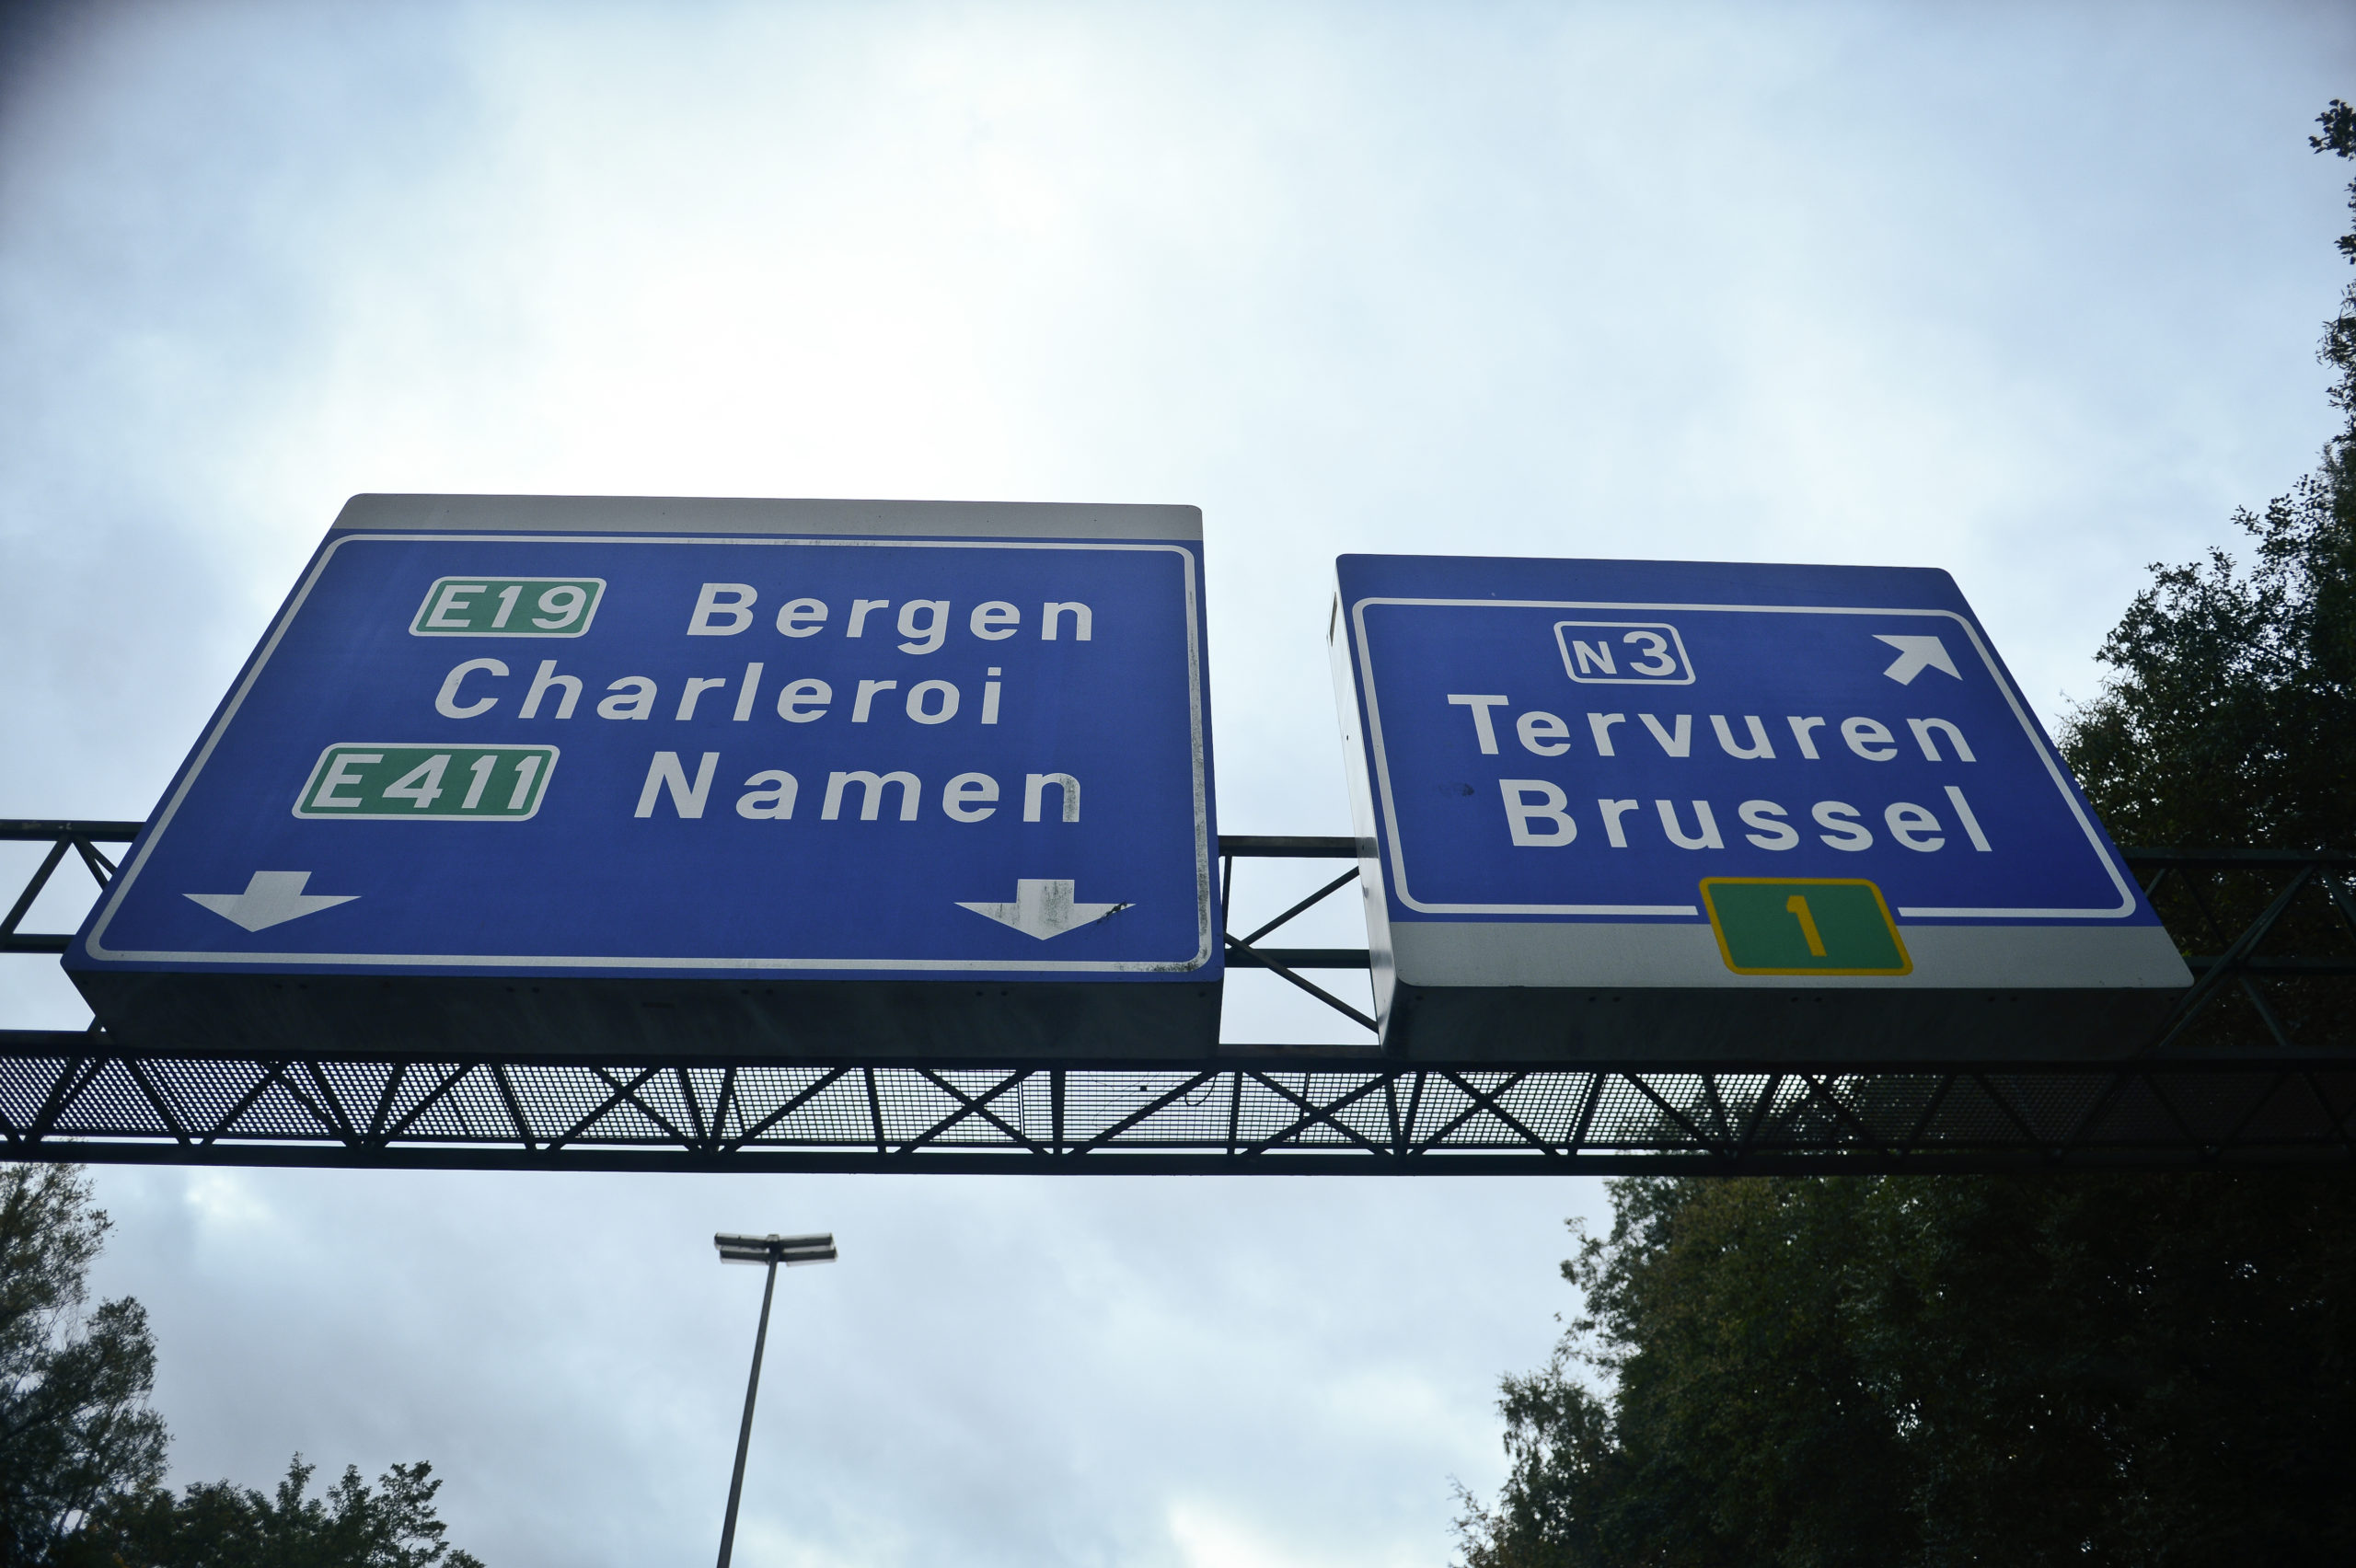 Brussels: brawl over plan to reduce lanes on Tervuren Avenue